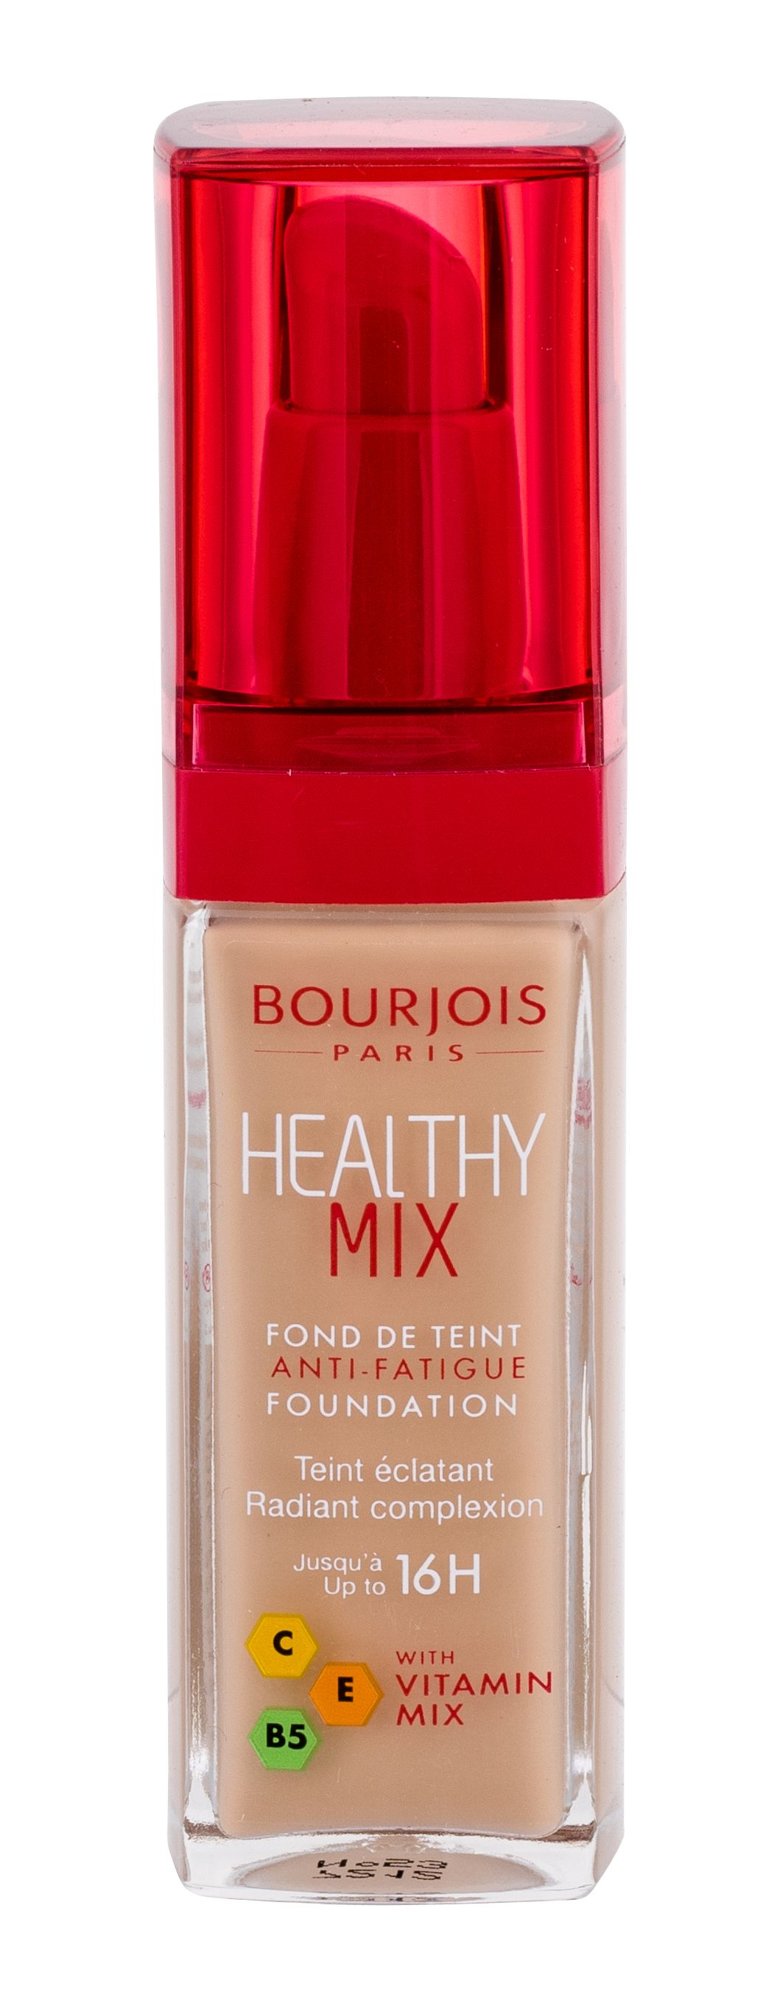 BOURJOIS Paris Healthy Mix Anti-Fatigue Foundation 30ml makiažo pagrindas